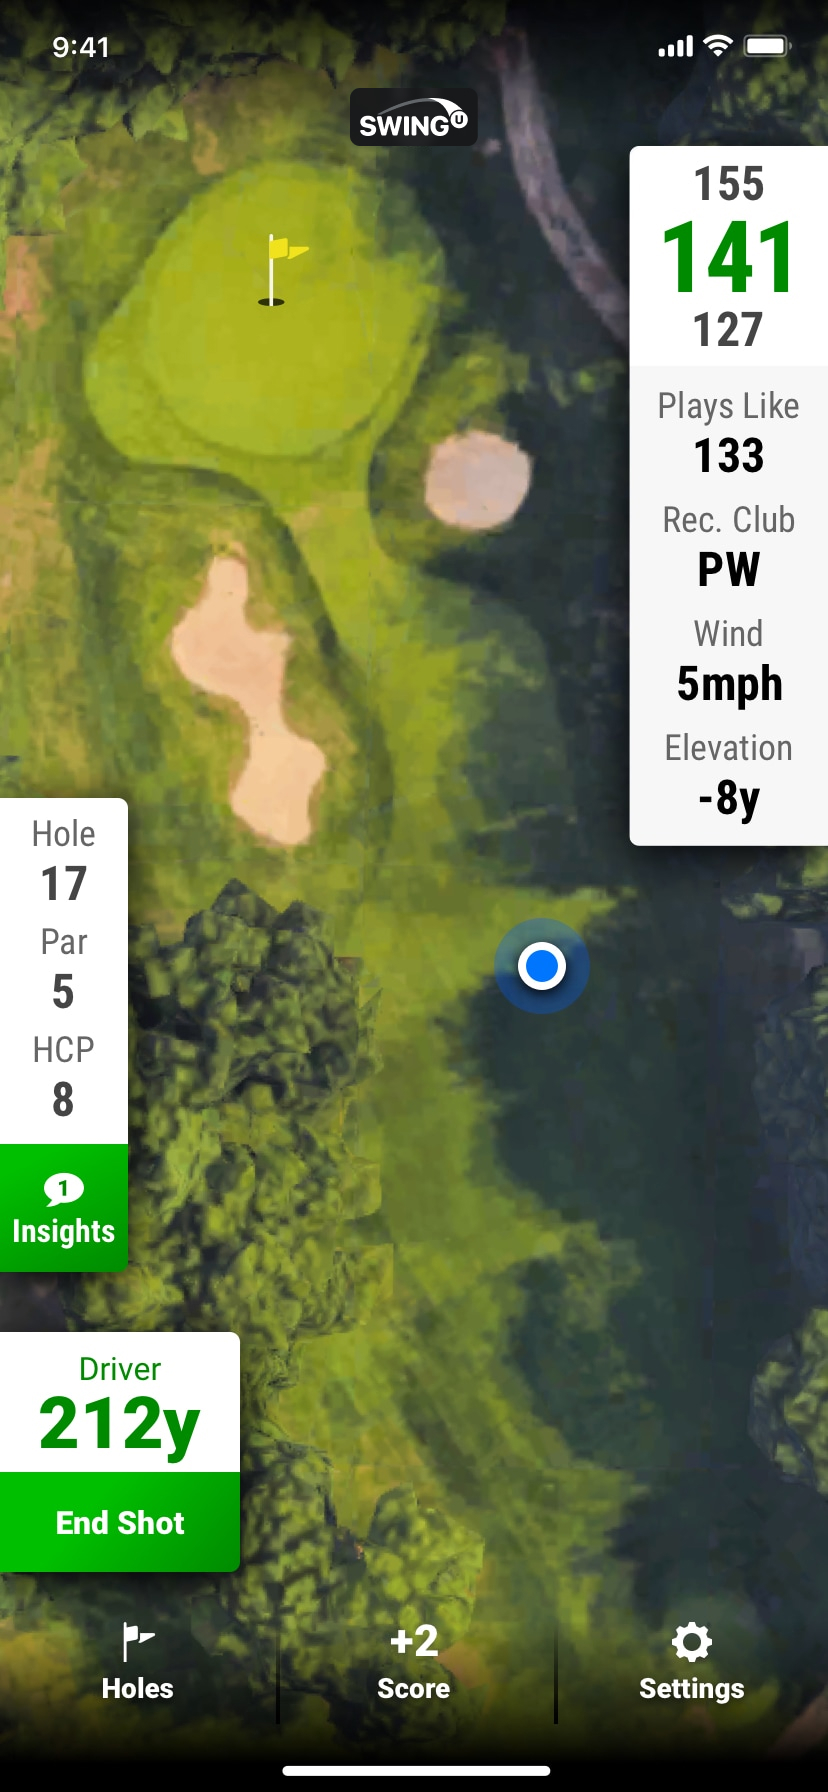 SwingU - Screenshot - SwingU Golf Tracking Shots